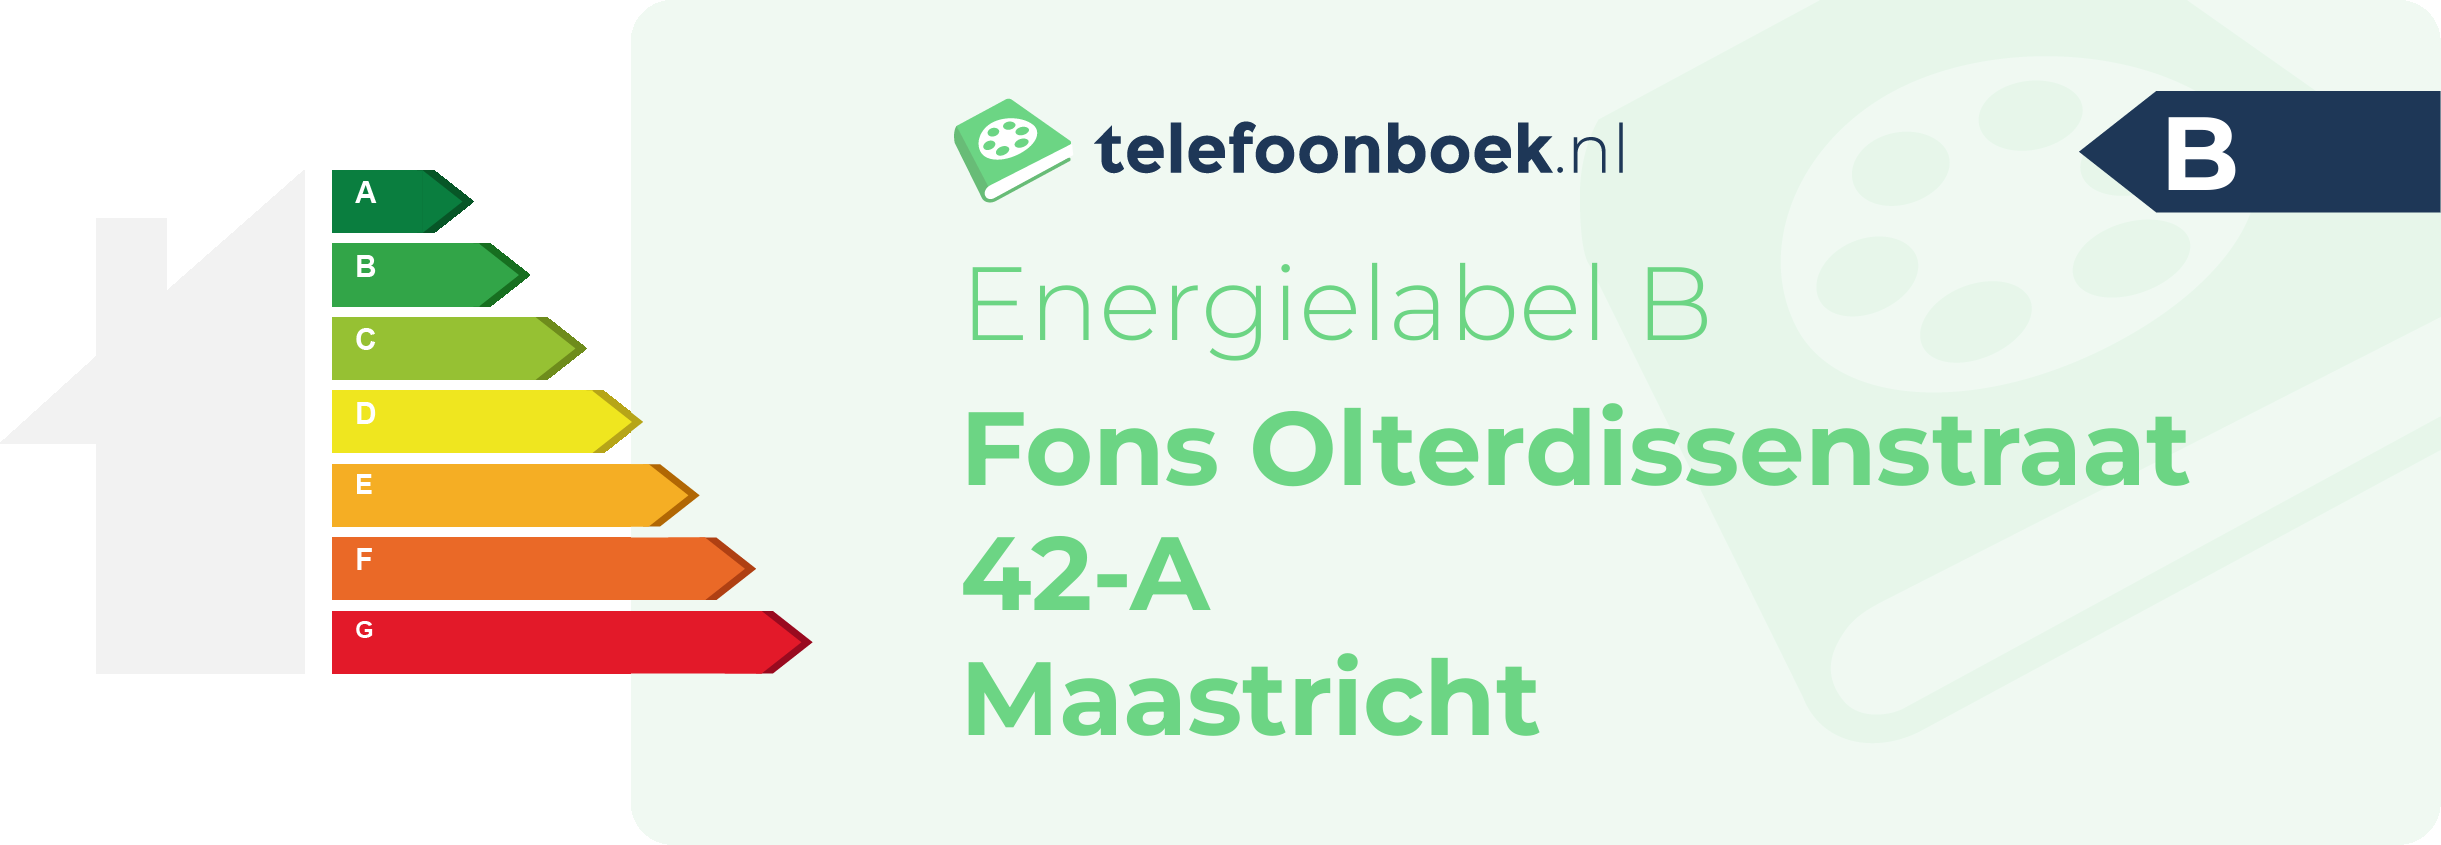 Energielabel Fons Olterdissenstraat 42-A Maastricht